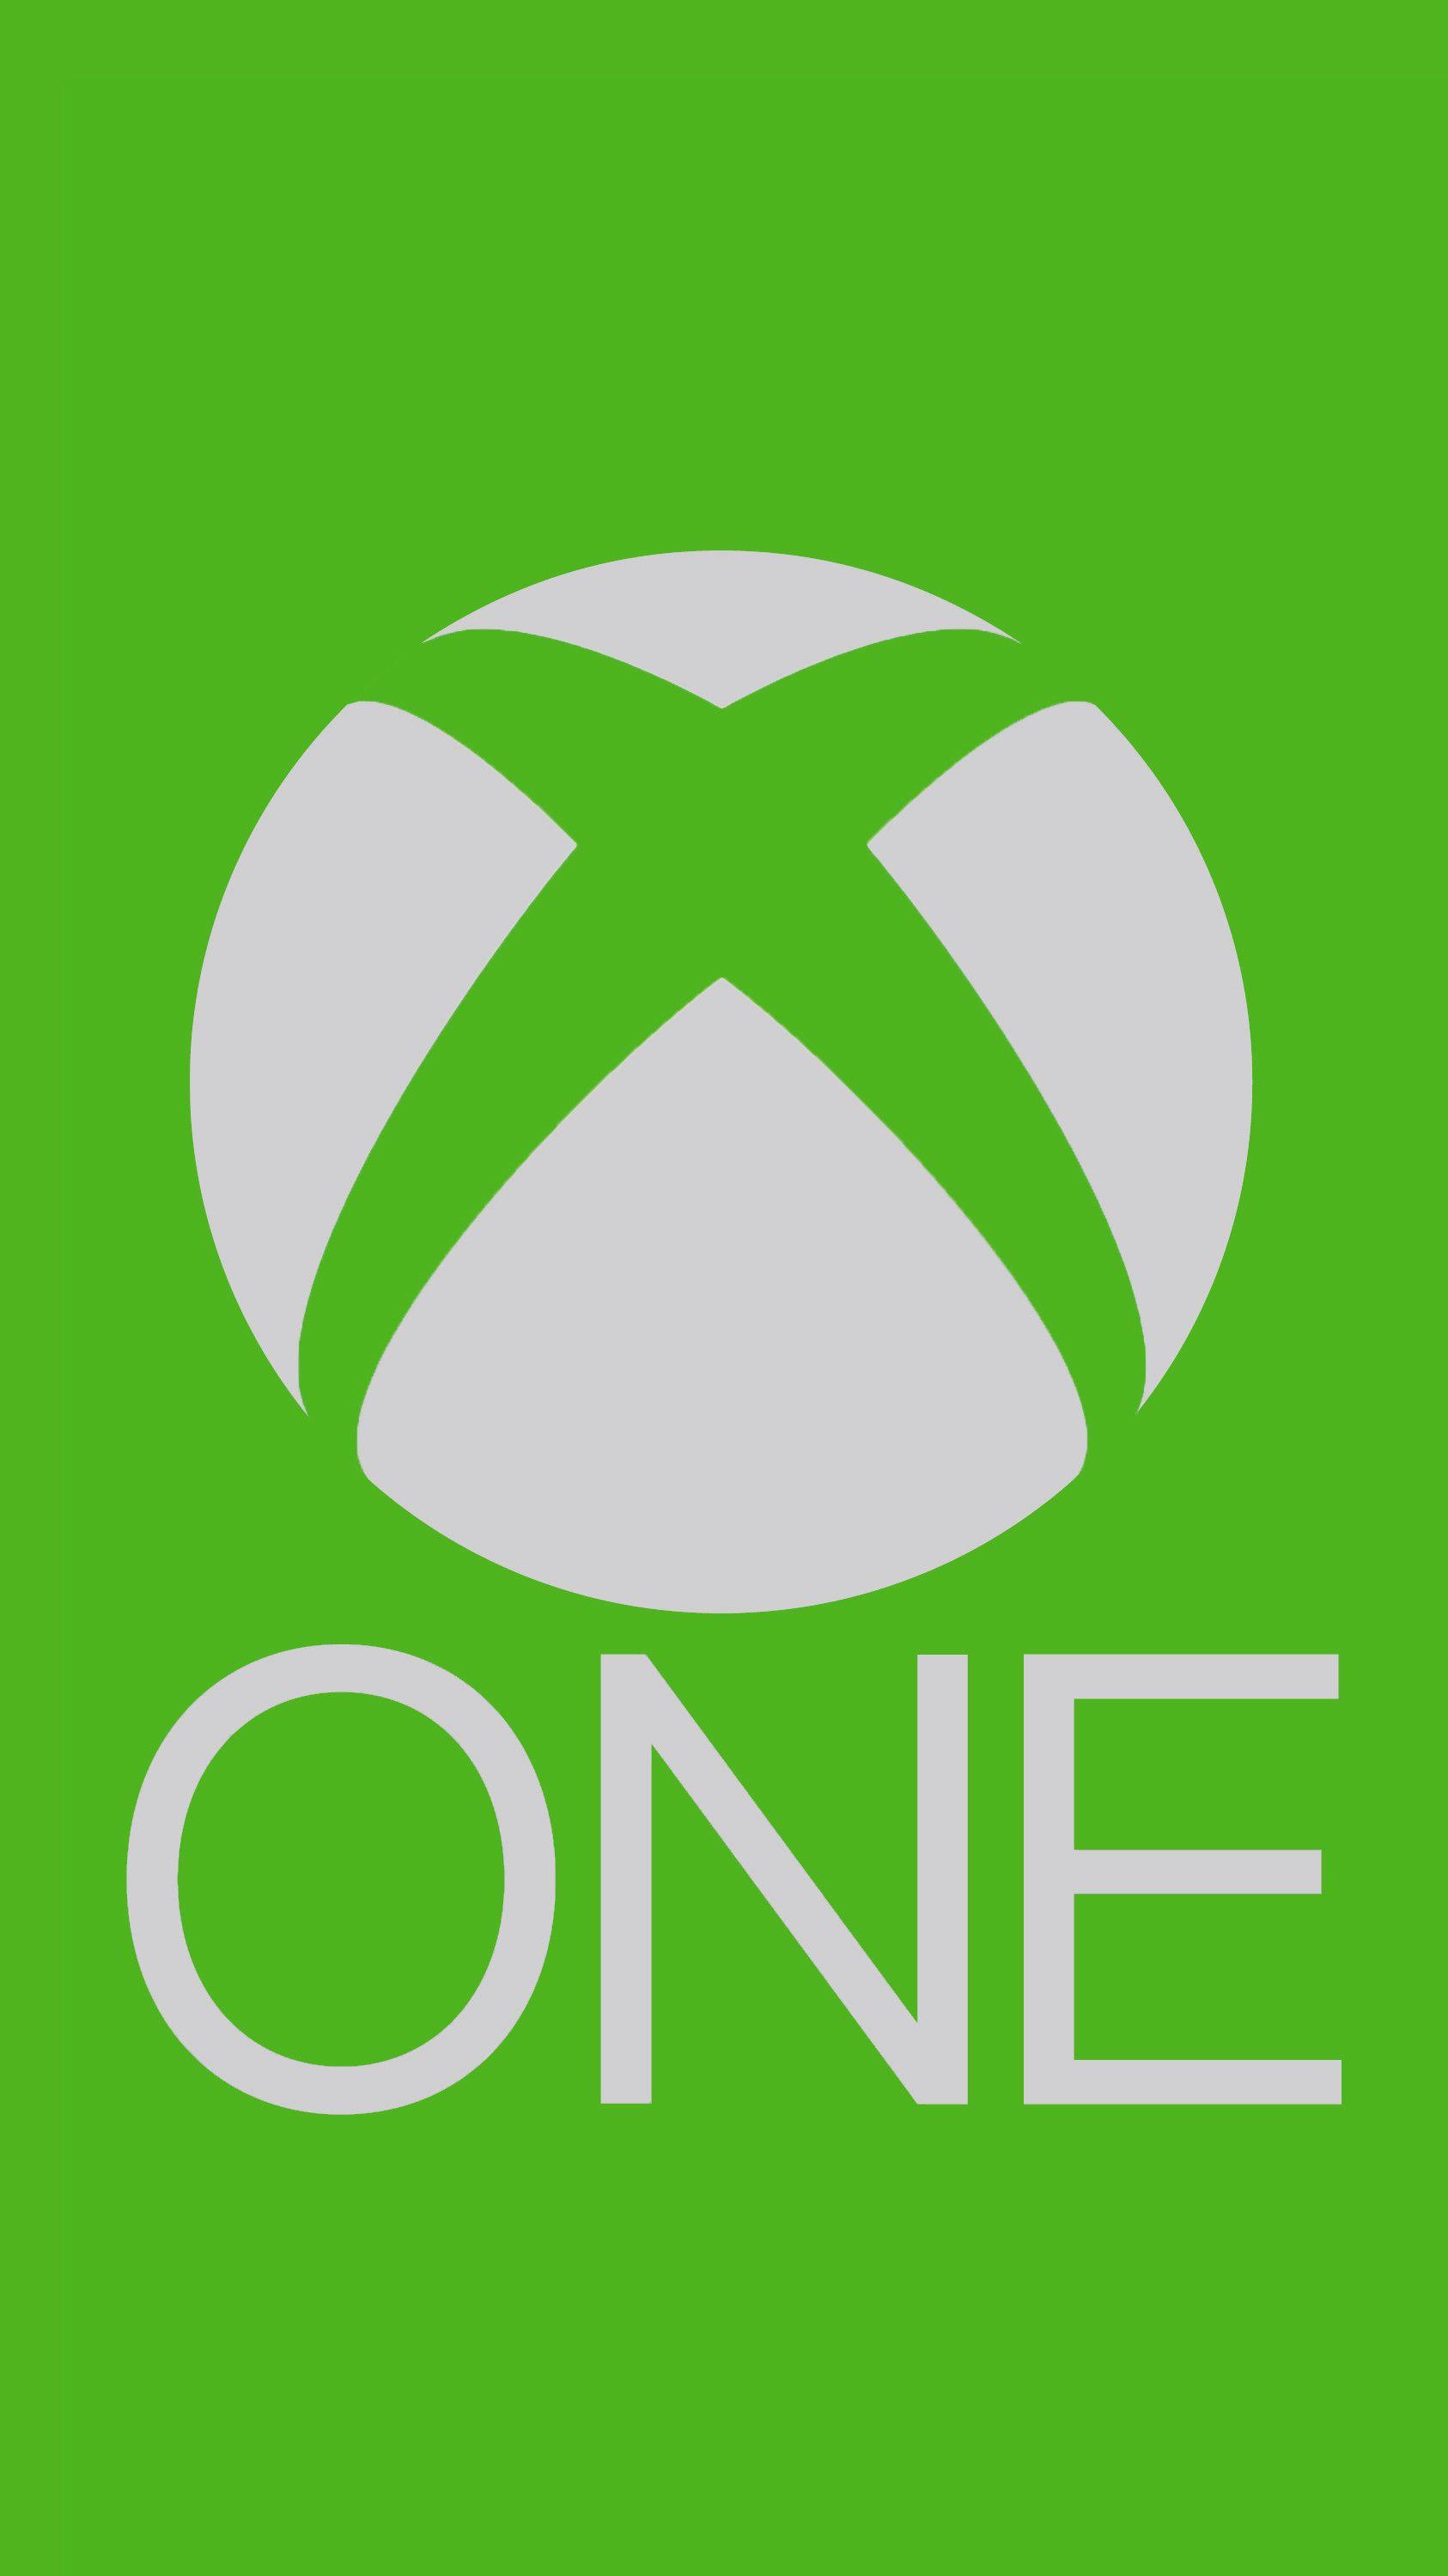 Xbox One Wallpaper